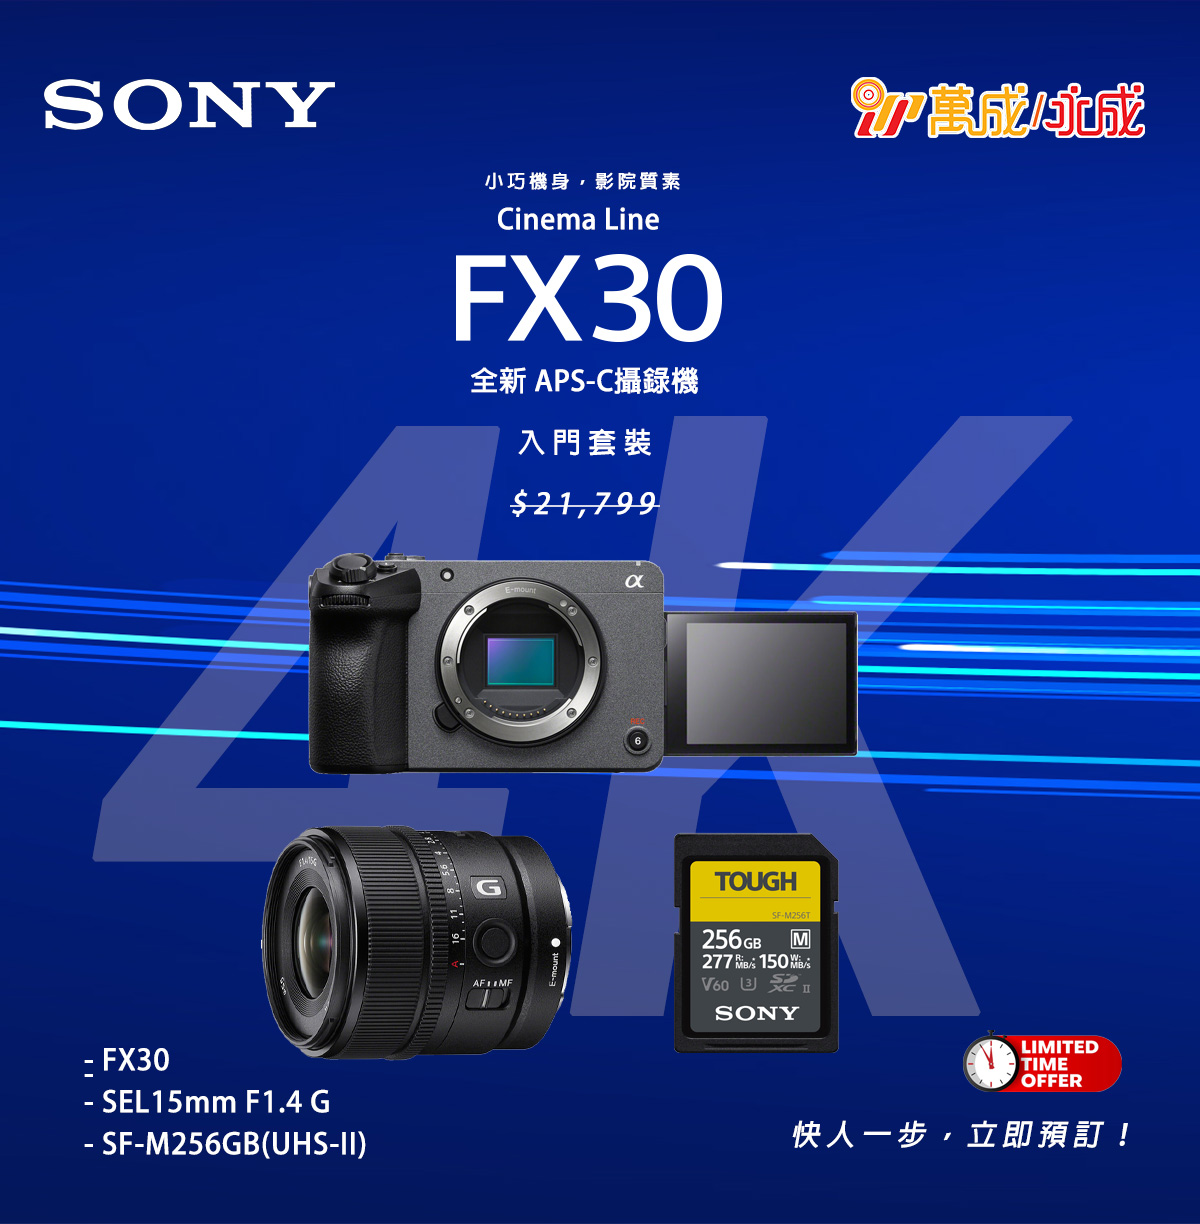 SONY FX30連SEL 15mm F1.4G鏡頭及SF-M256GB (UHS-II)記憶卡| 萬成/永成